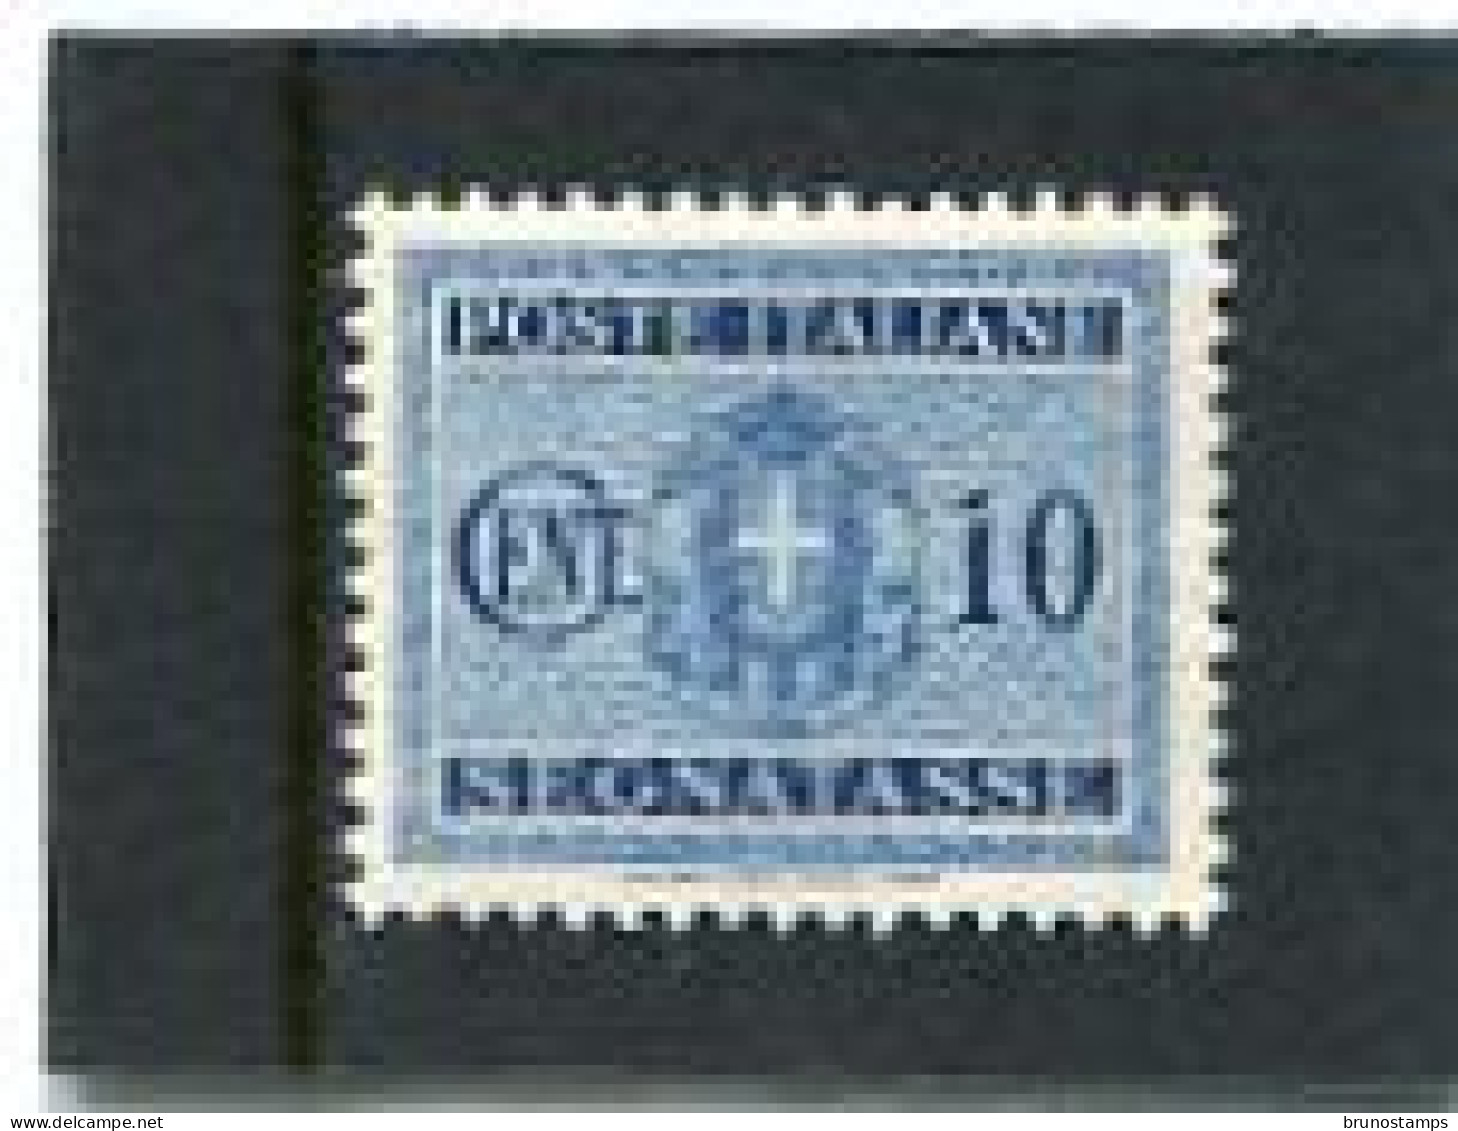 ITALY/ITALIA - 1934  POSTAGE DUE  10c  MINT NH - Postage Due